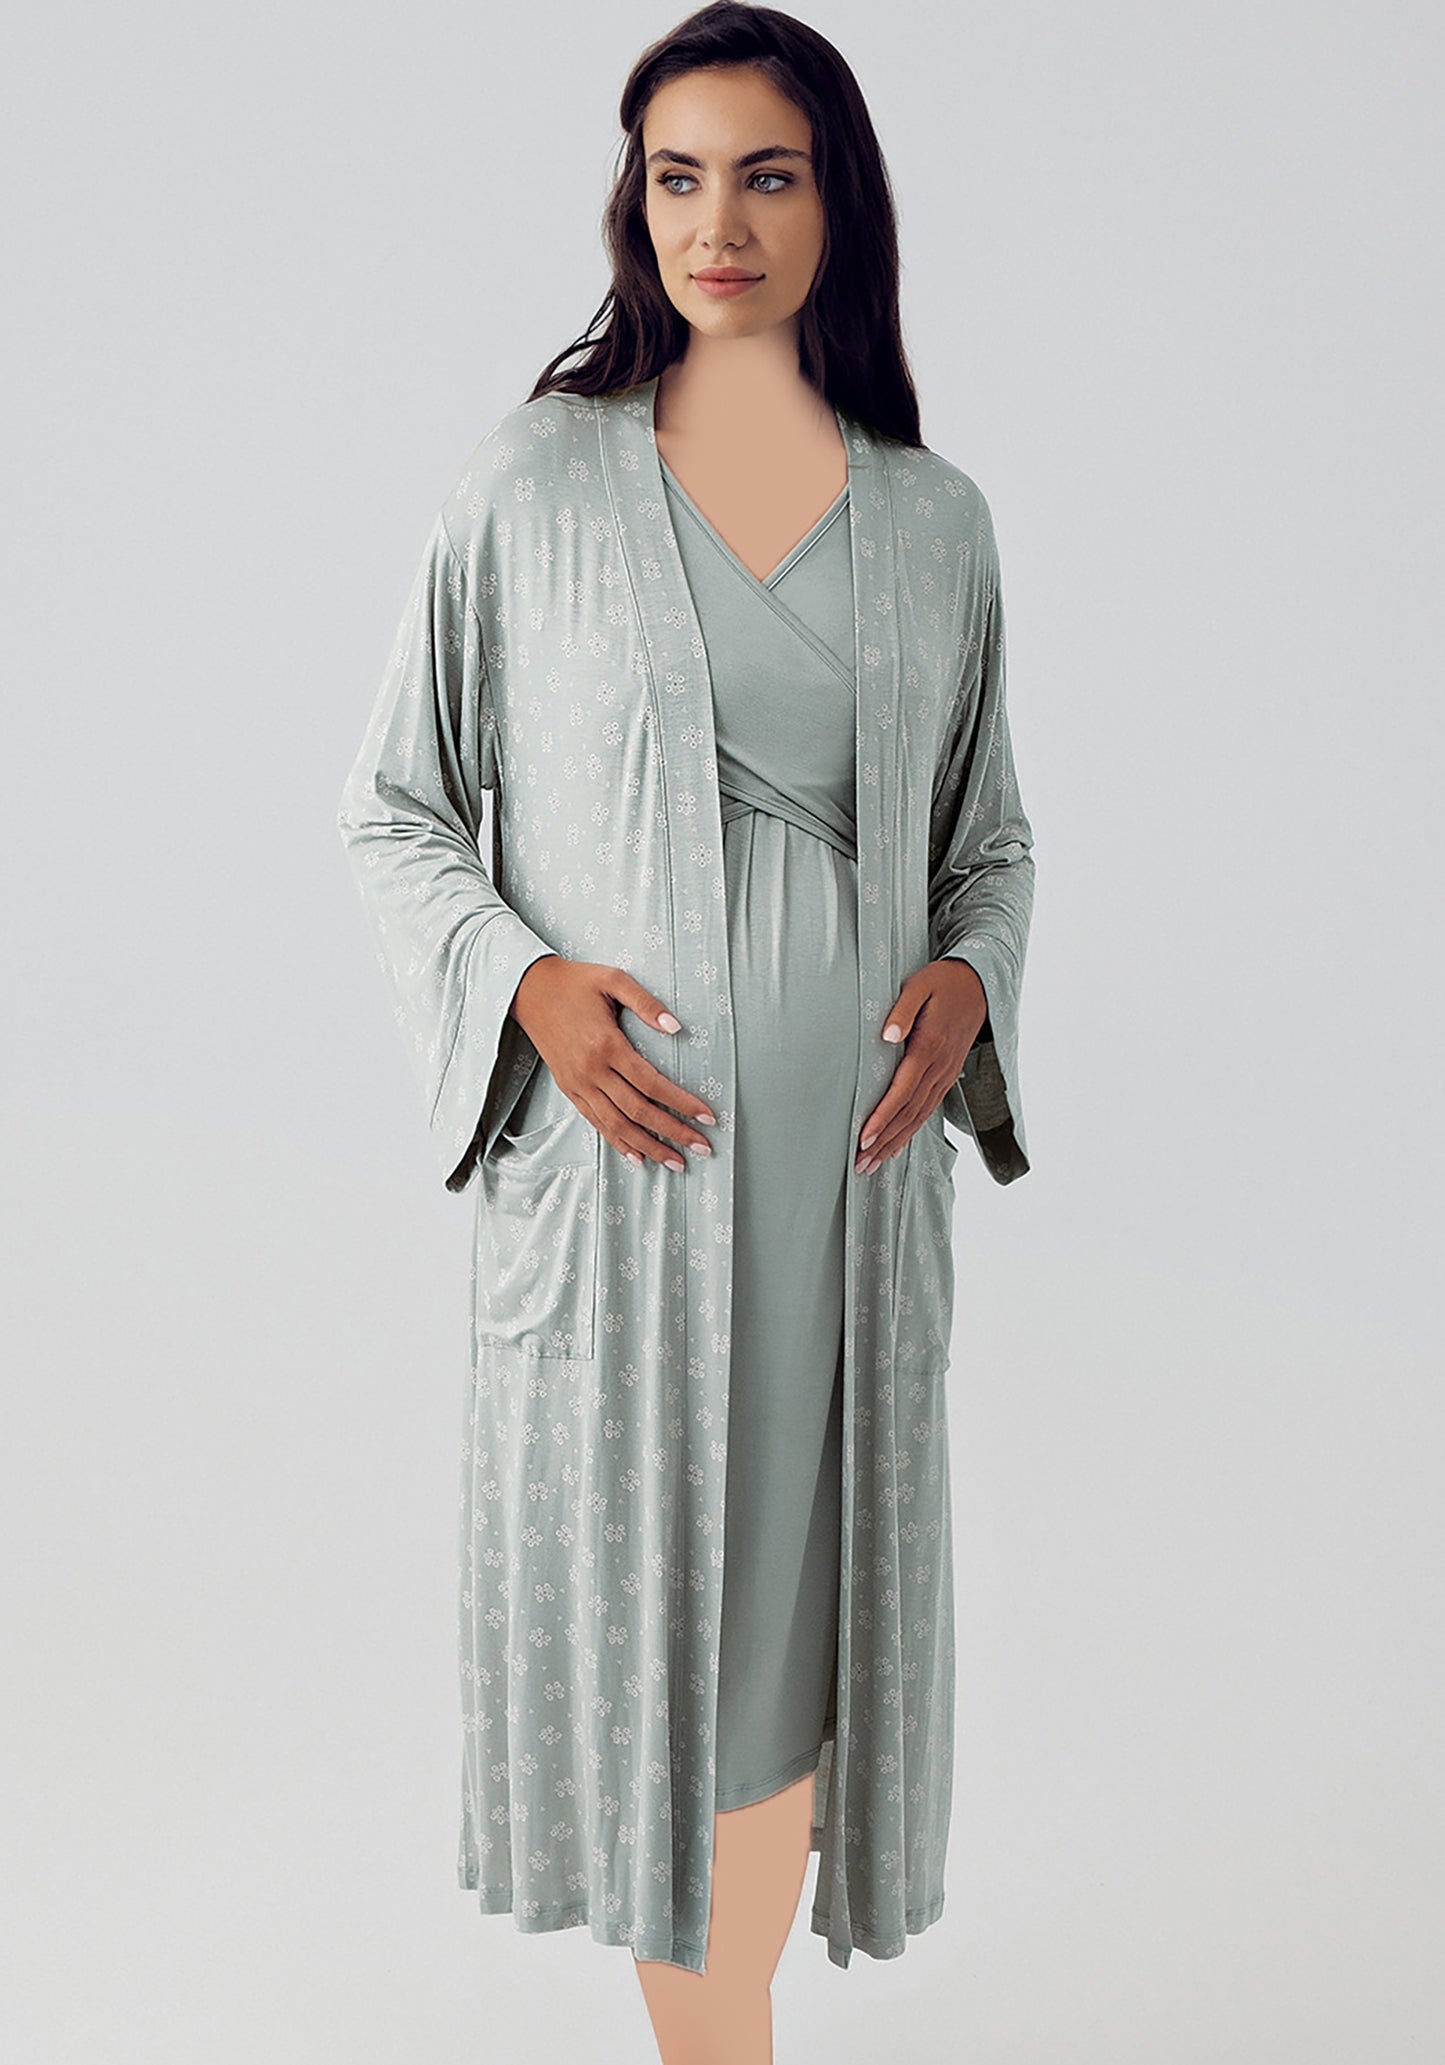 Maternal 2 Piece Robe Night Gown